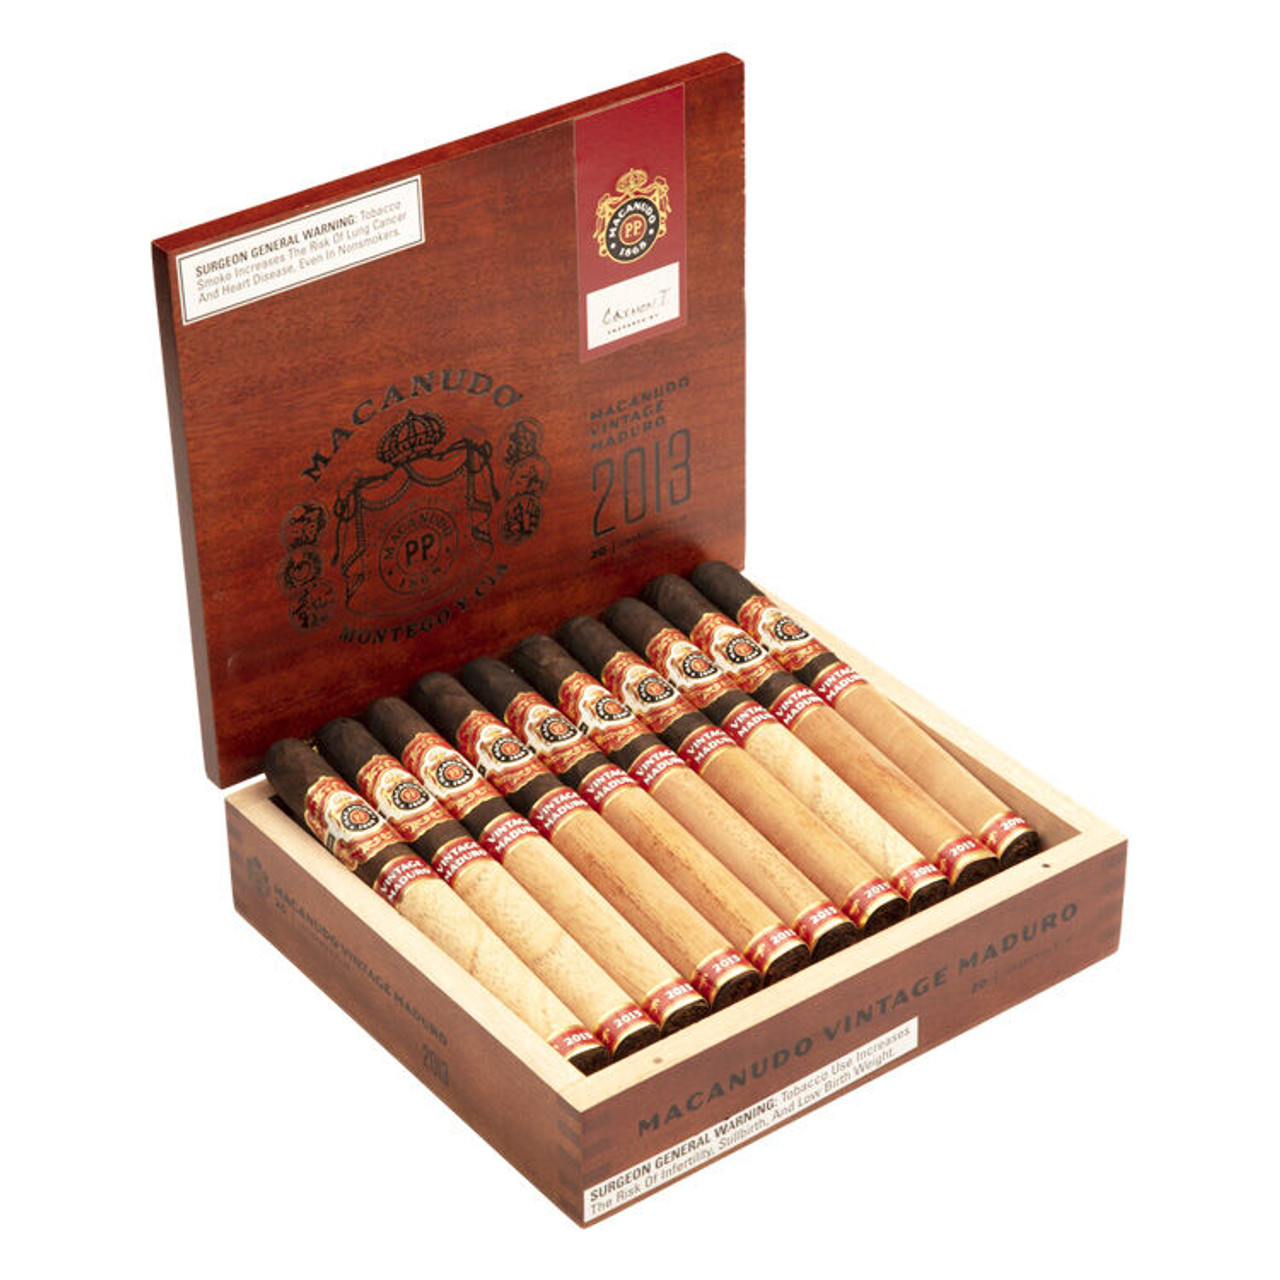 Macanudo Maduro Vintage 2013 Churchill Cigars - 7 x 49 (Box of 20) Open